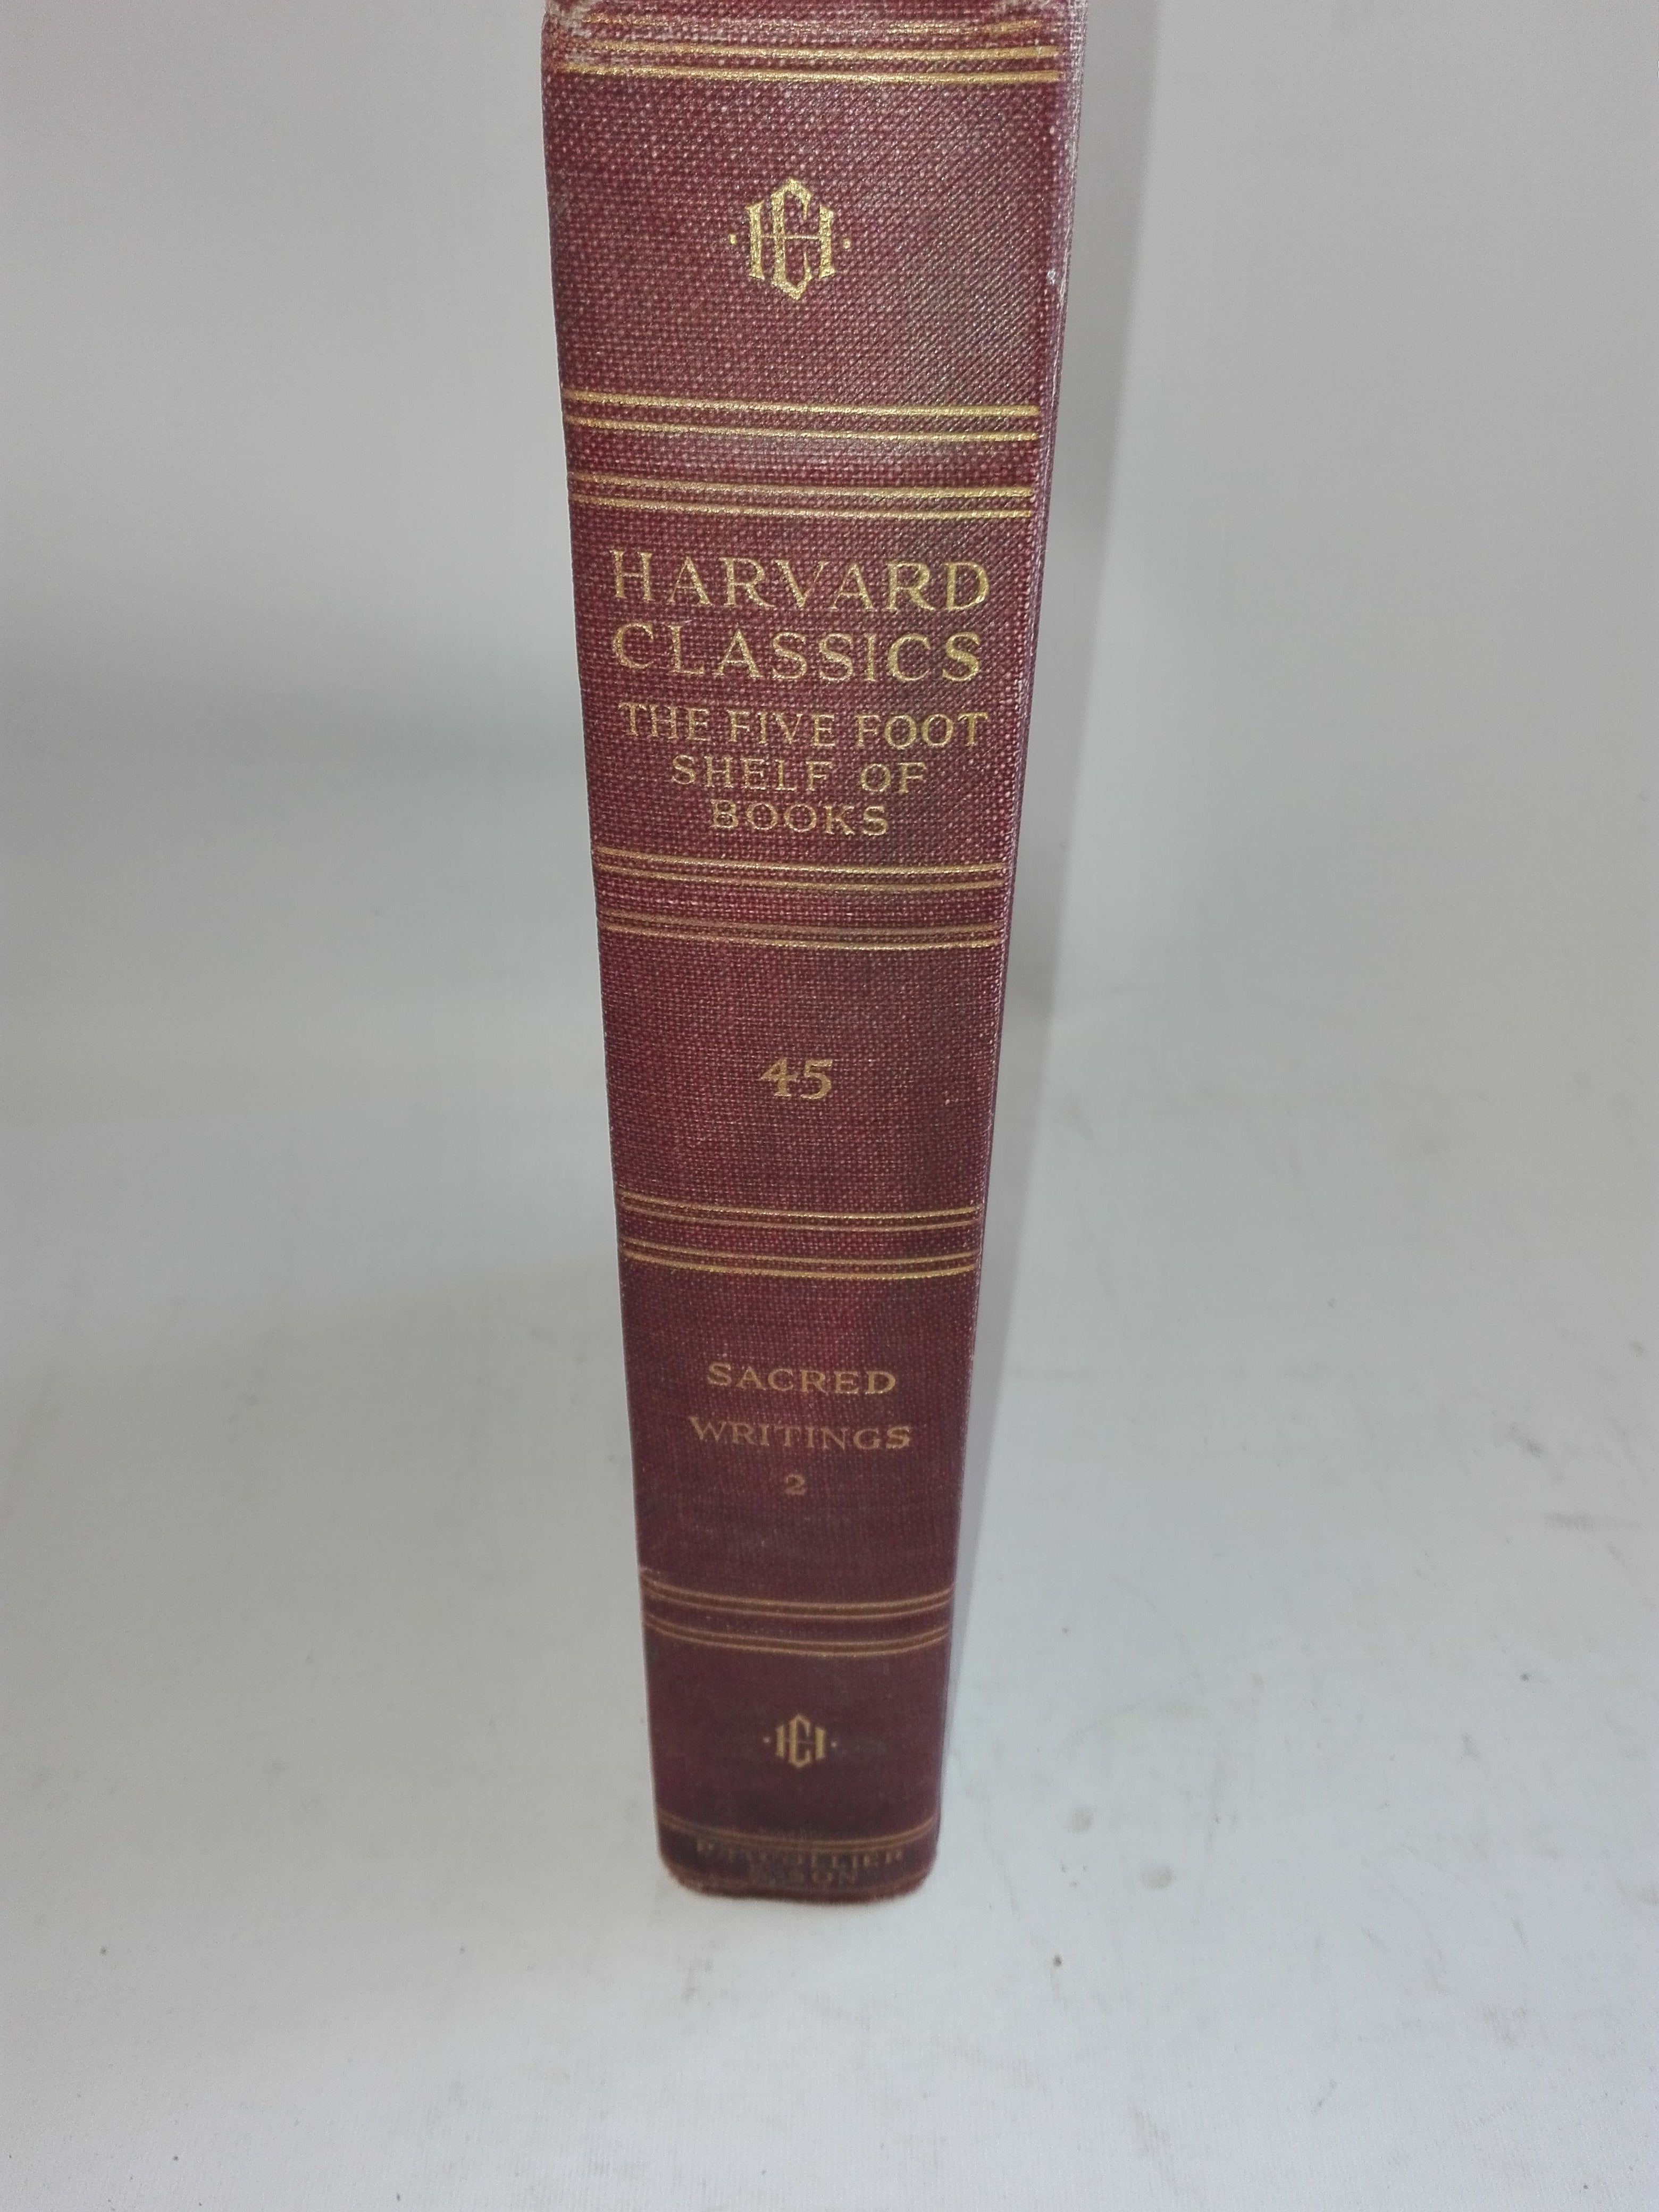 Harvard Classic The Five Foot Shelf Of Books 45